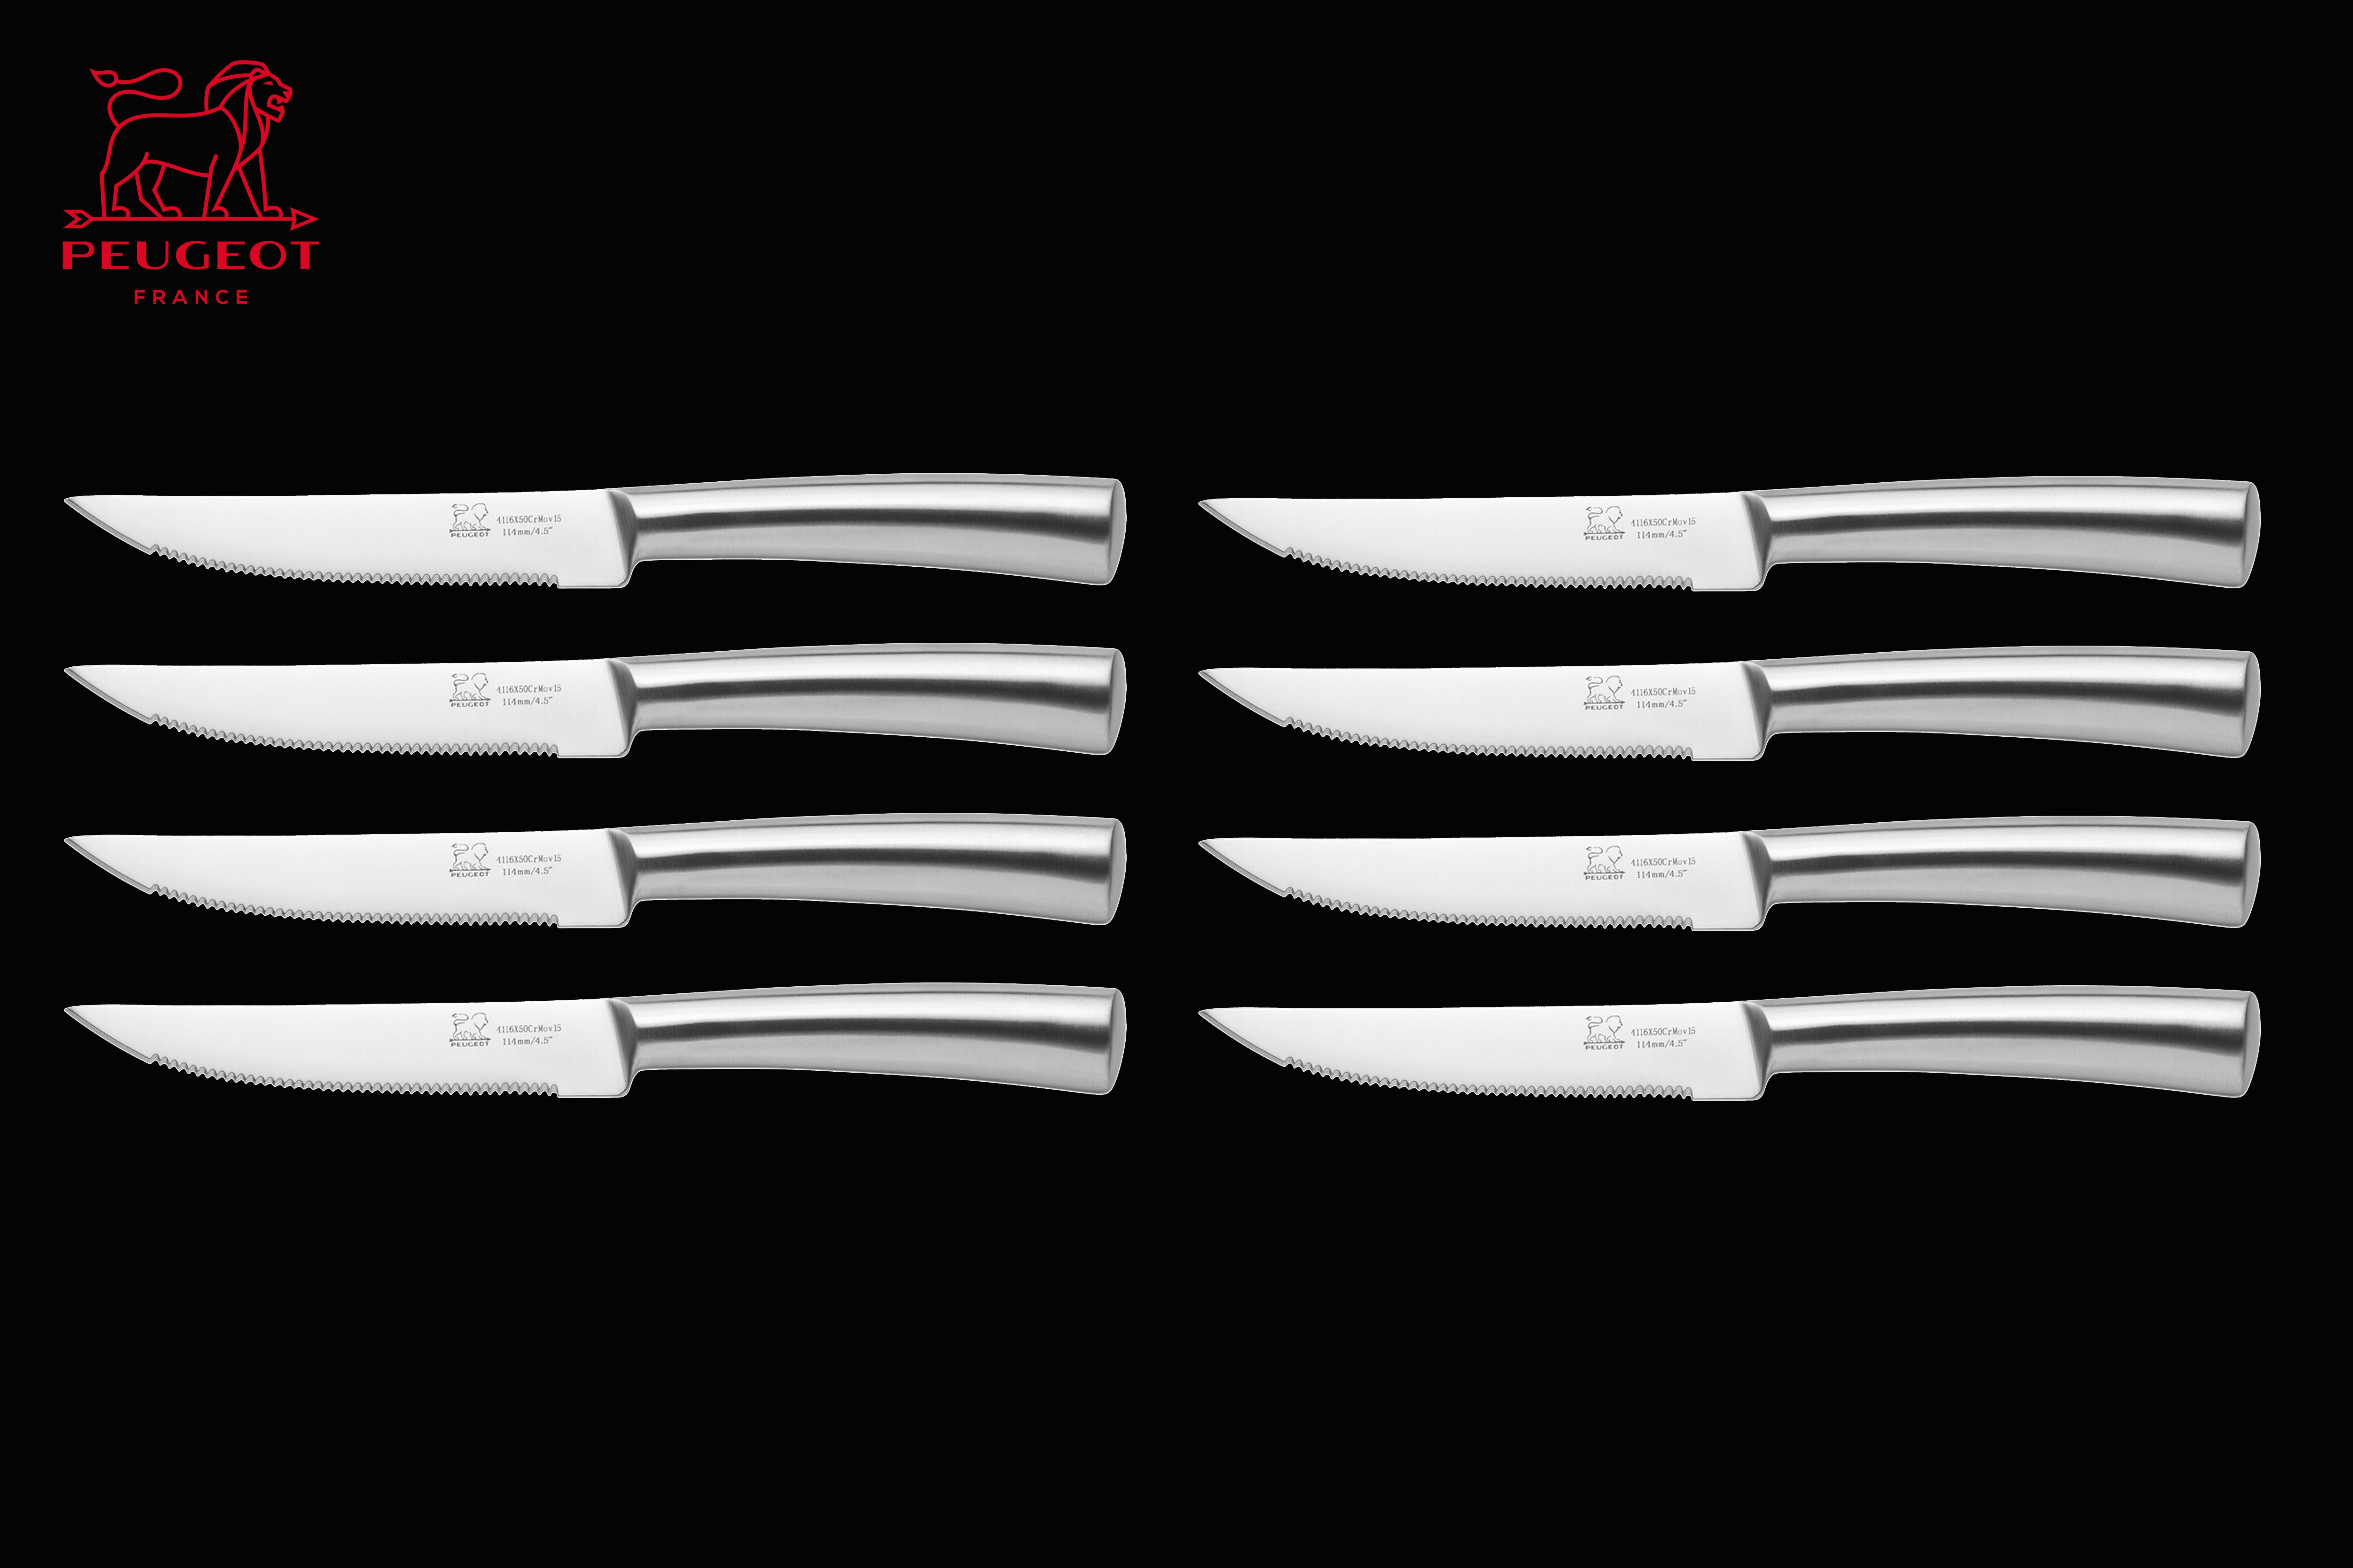 PEUGEOT Steakmesser Steakmesser (8 Stück), Klinge: Chrom-Molybdän-Vanadium-Stahl, Griff: Edelstahl